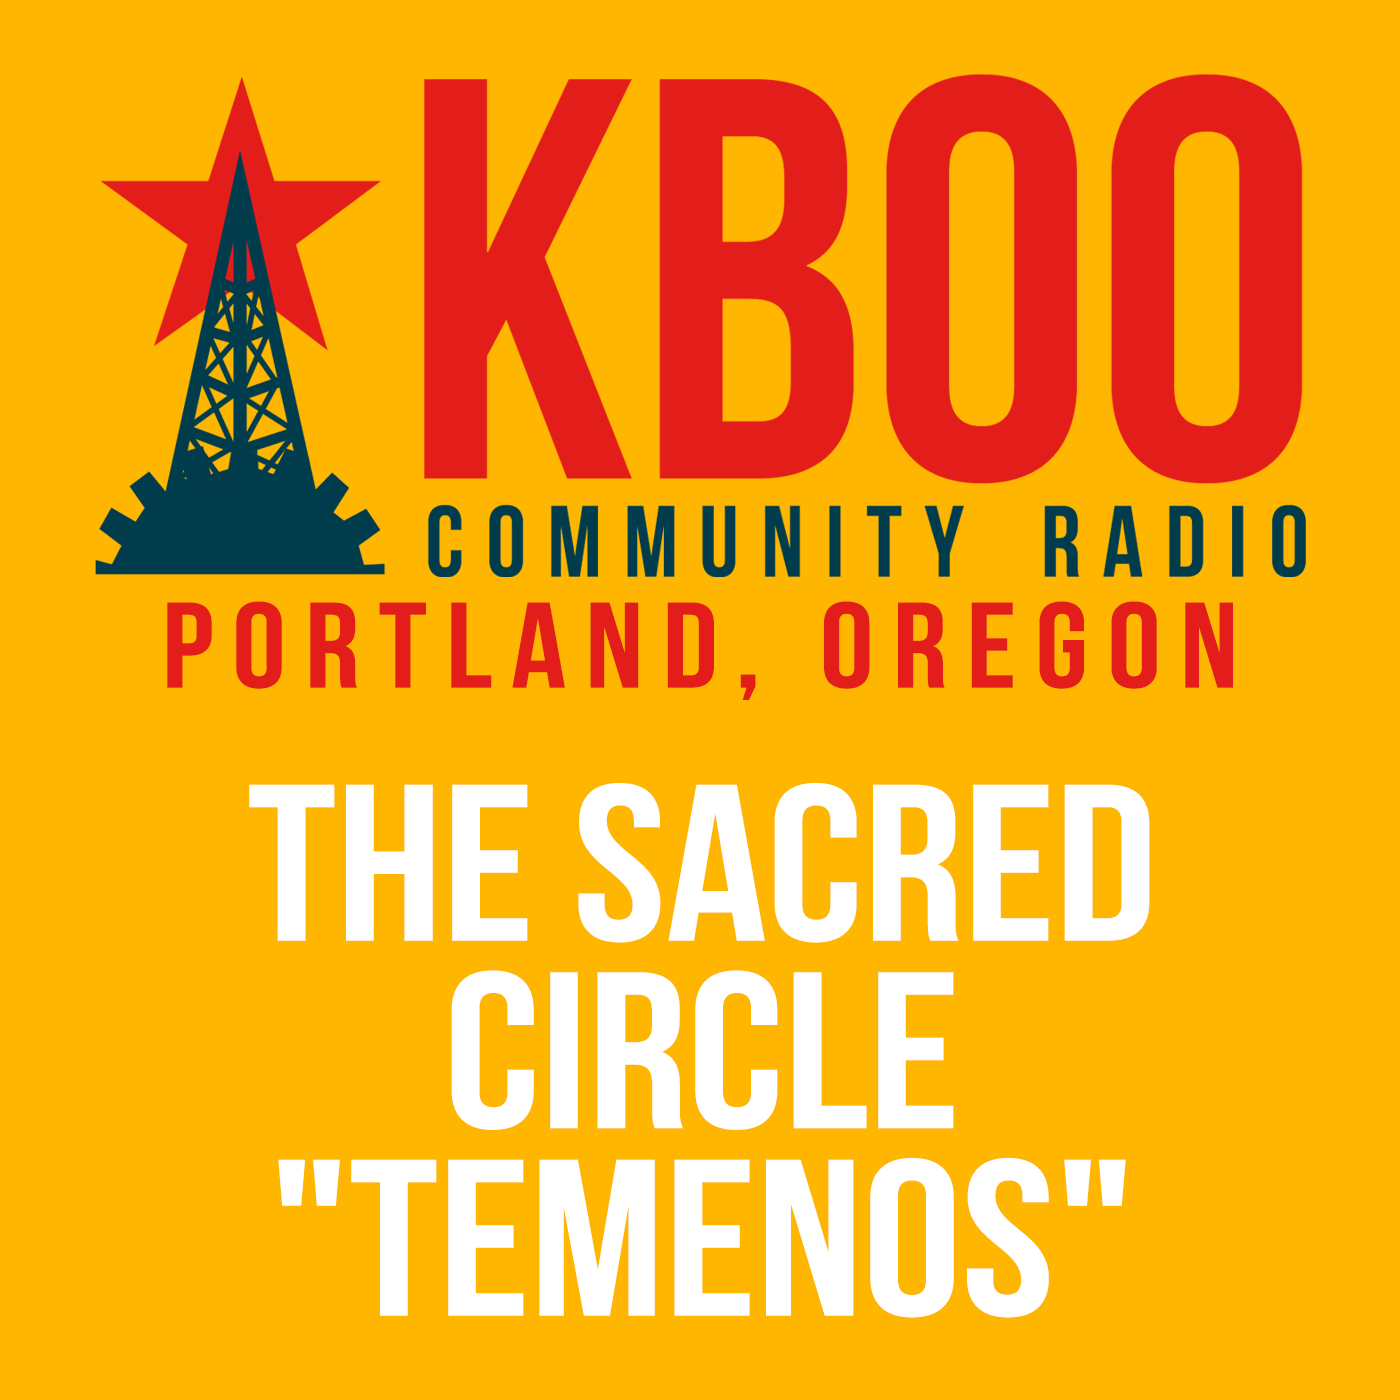 The Sacred Circle "TEMENOS"